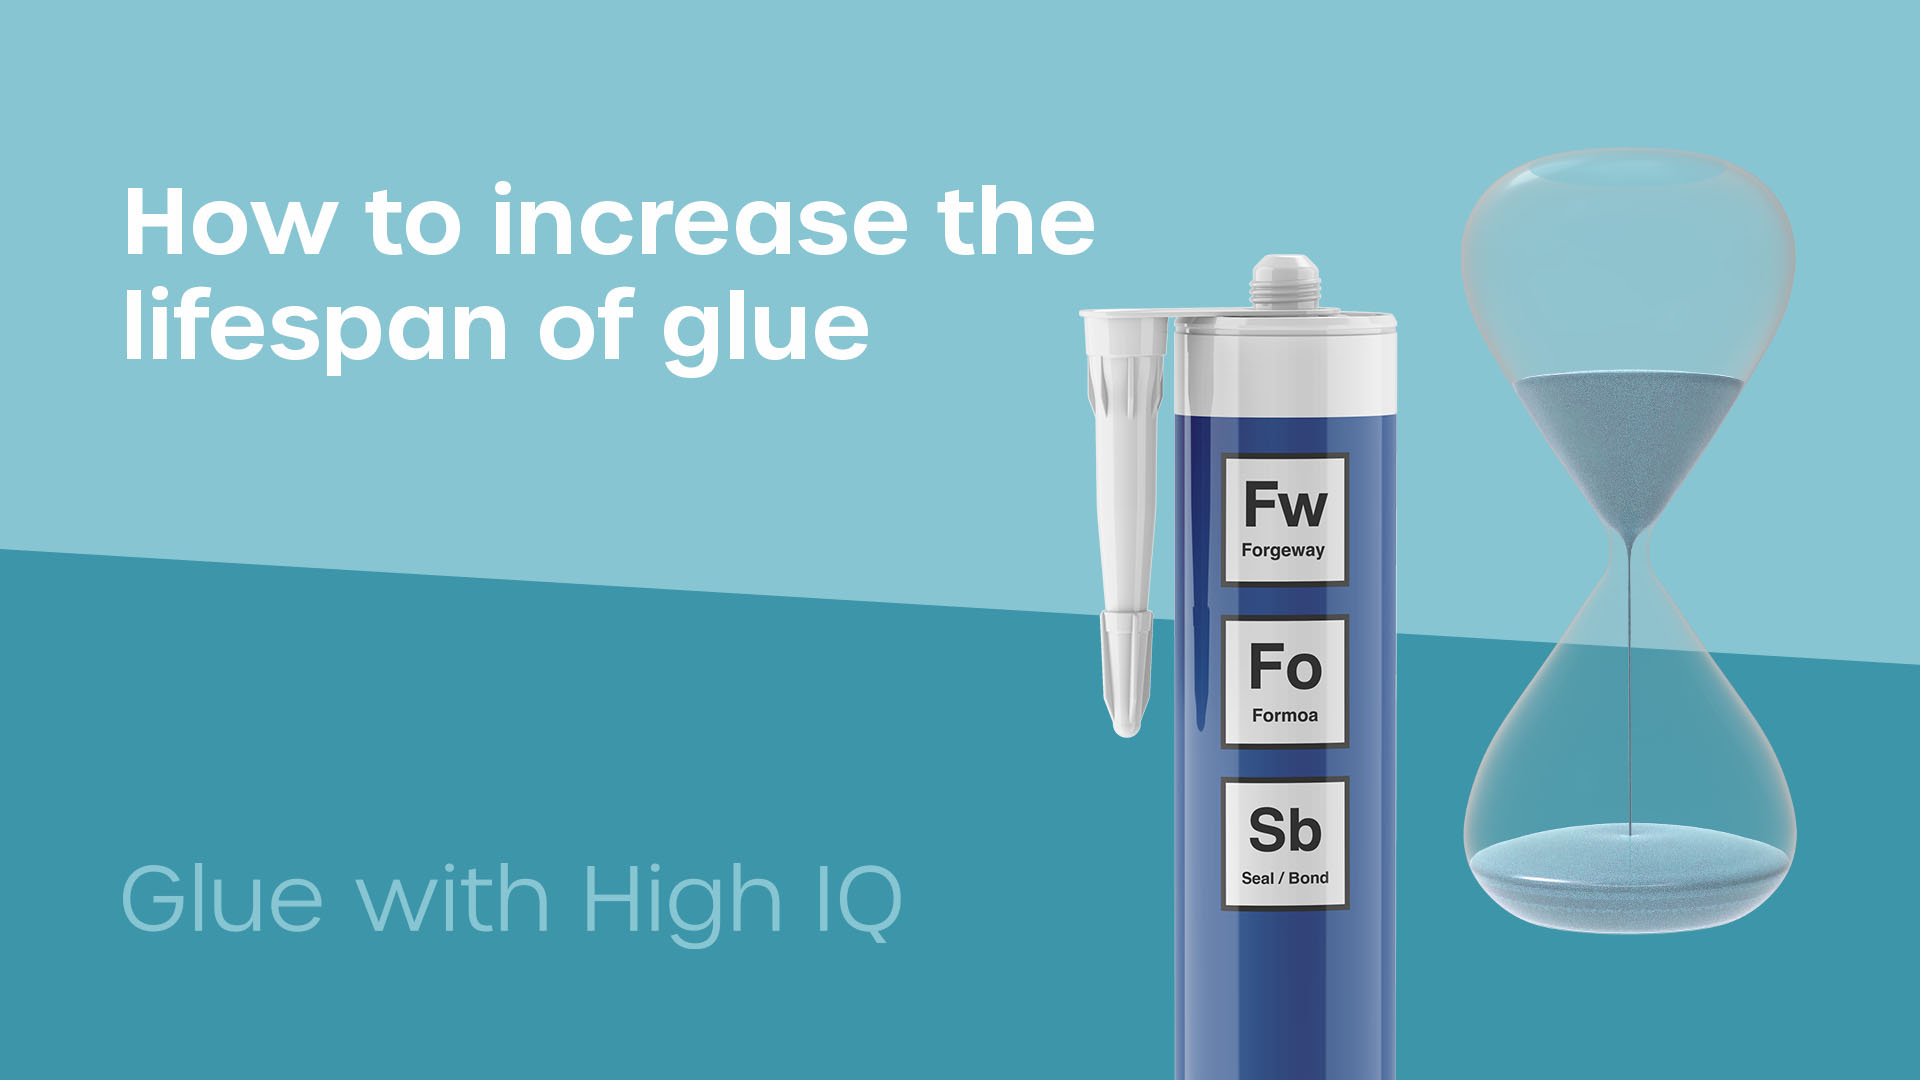 Increasing the lifespan of glue